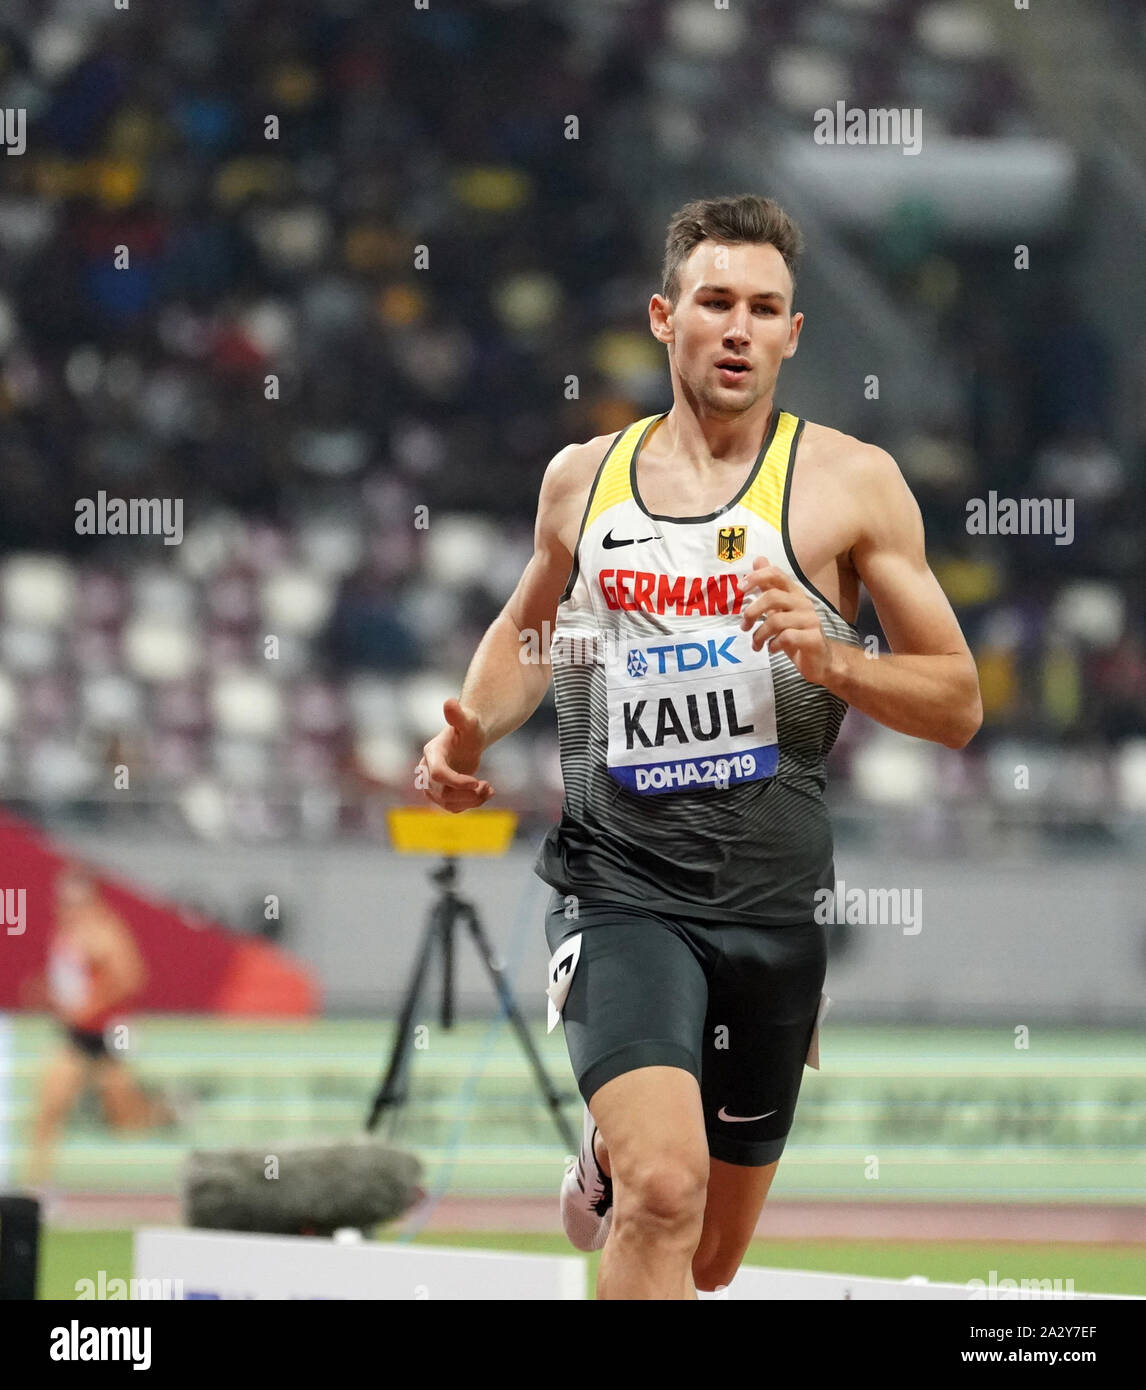 Doha, Qatar. 3rd Oct, 2019. Niklas Kaul of Germany competes during the 1500m event of men's decathlon at the 2019 IAAF World Athletics Championships in Doha, Qatar, . Credit: Li Gang/Xinhua/Alamy Live News Stock Photo